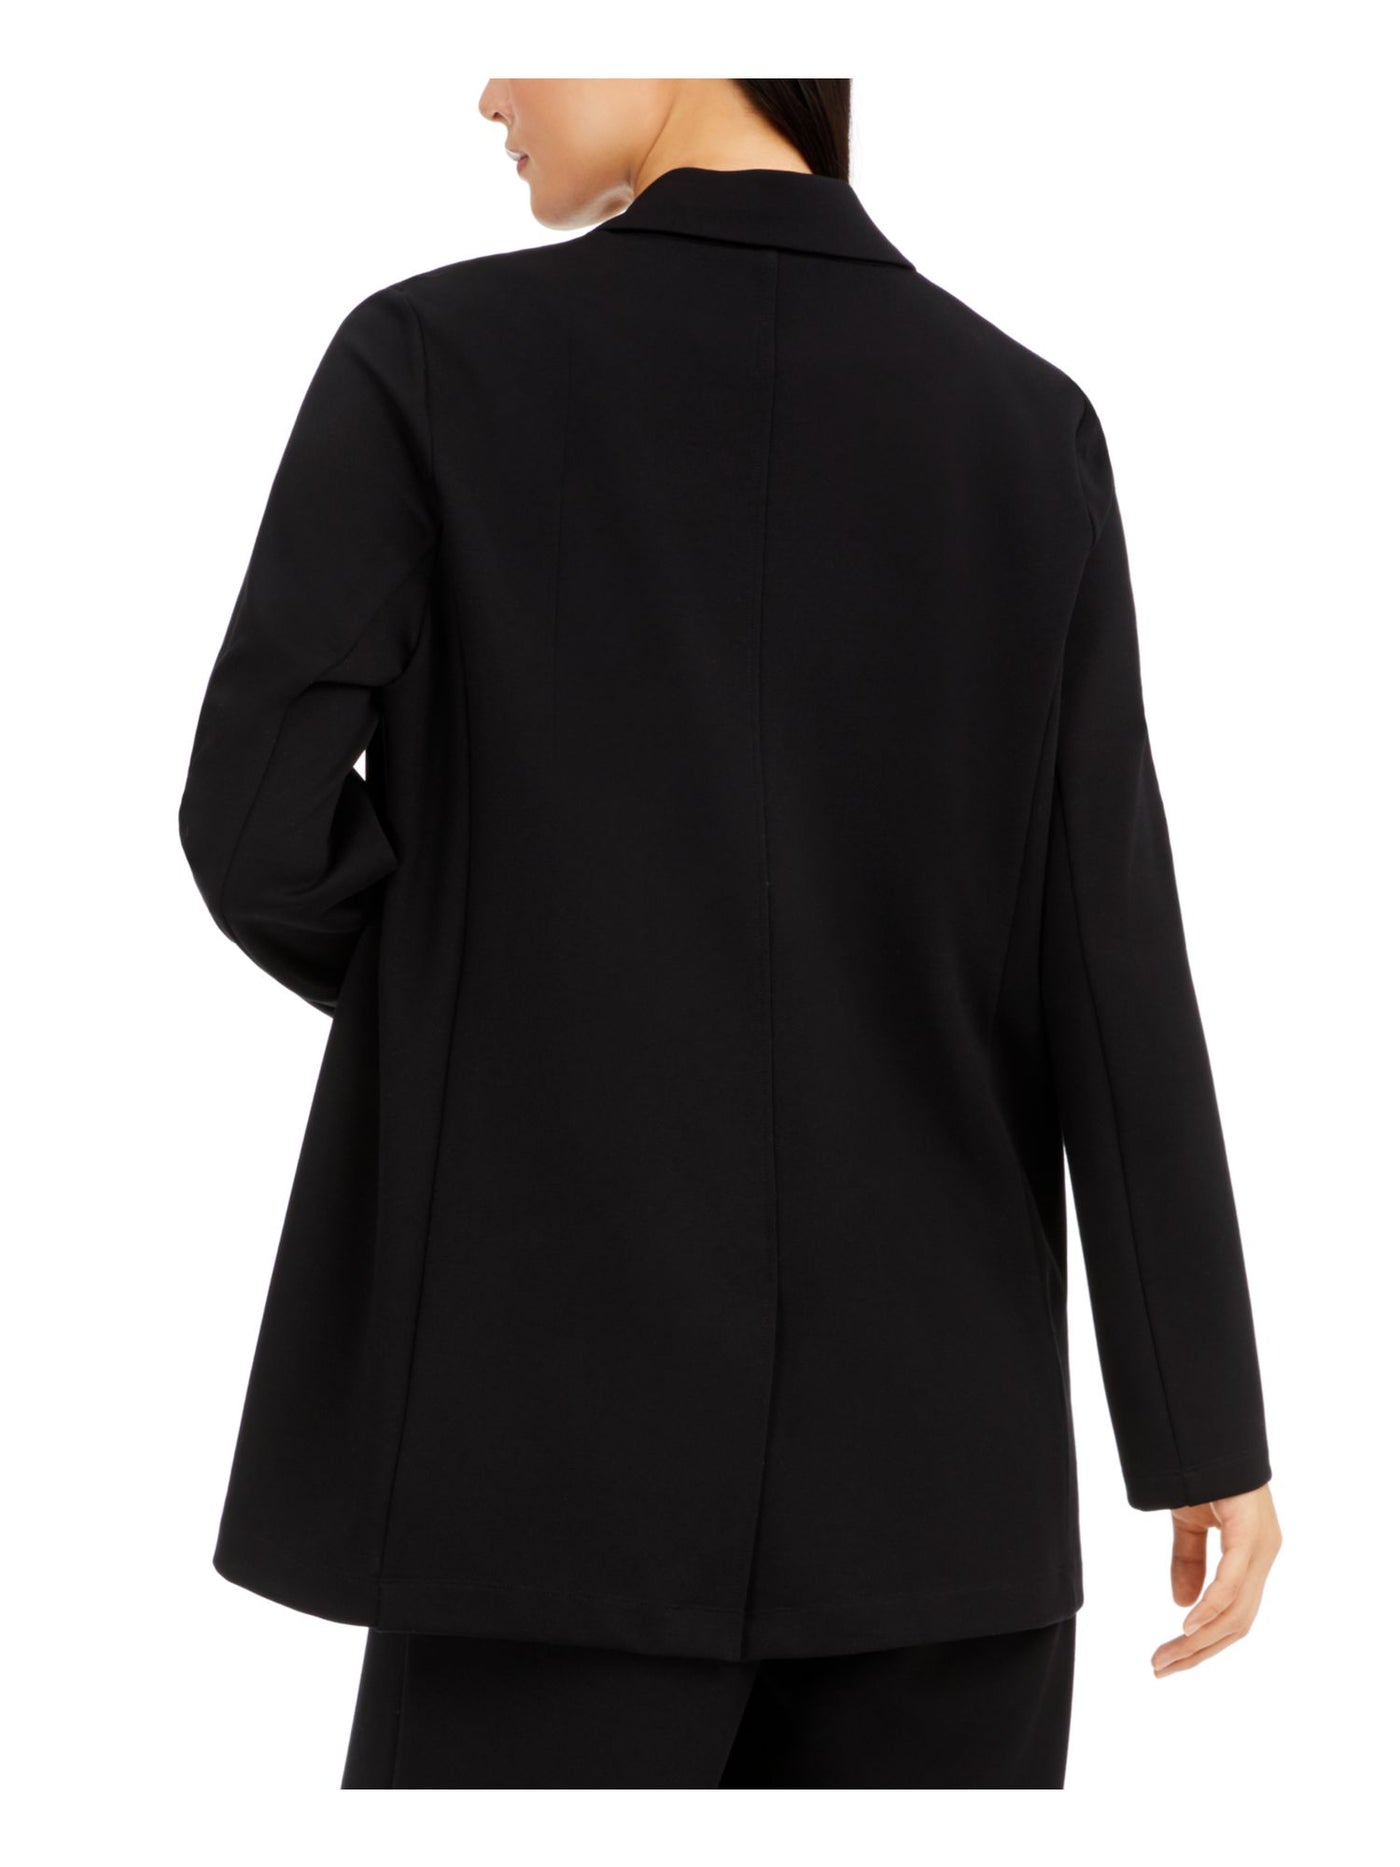 EILEEN FISHER Womens Black Pocketed Tencel Notch Collar Blazer Jacket L